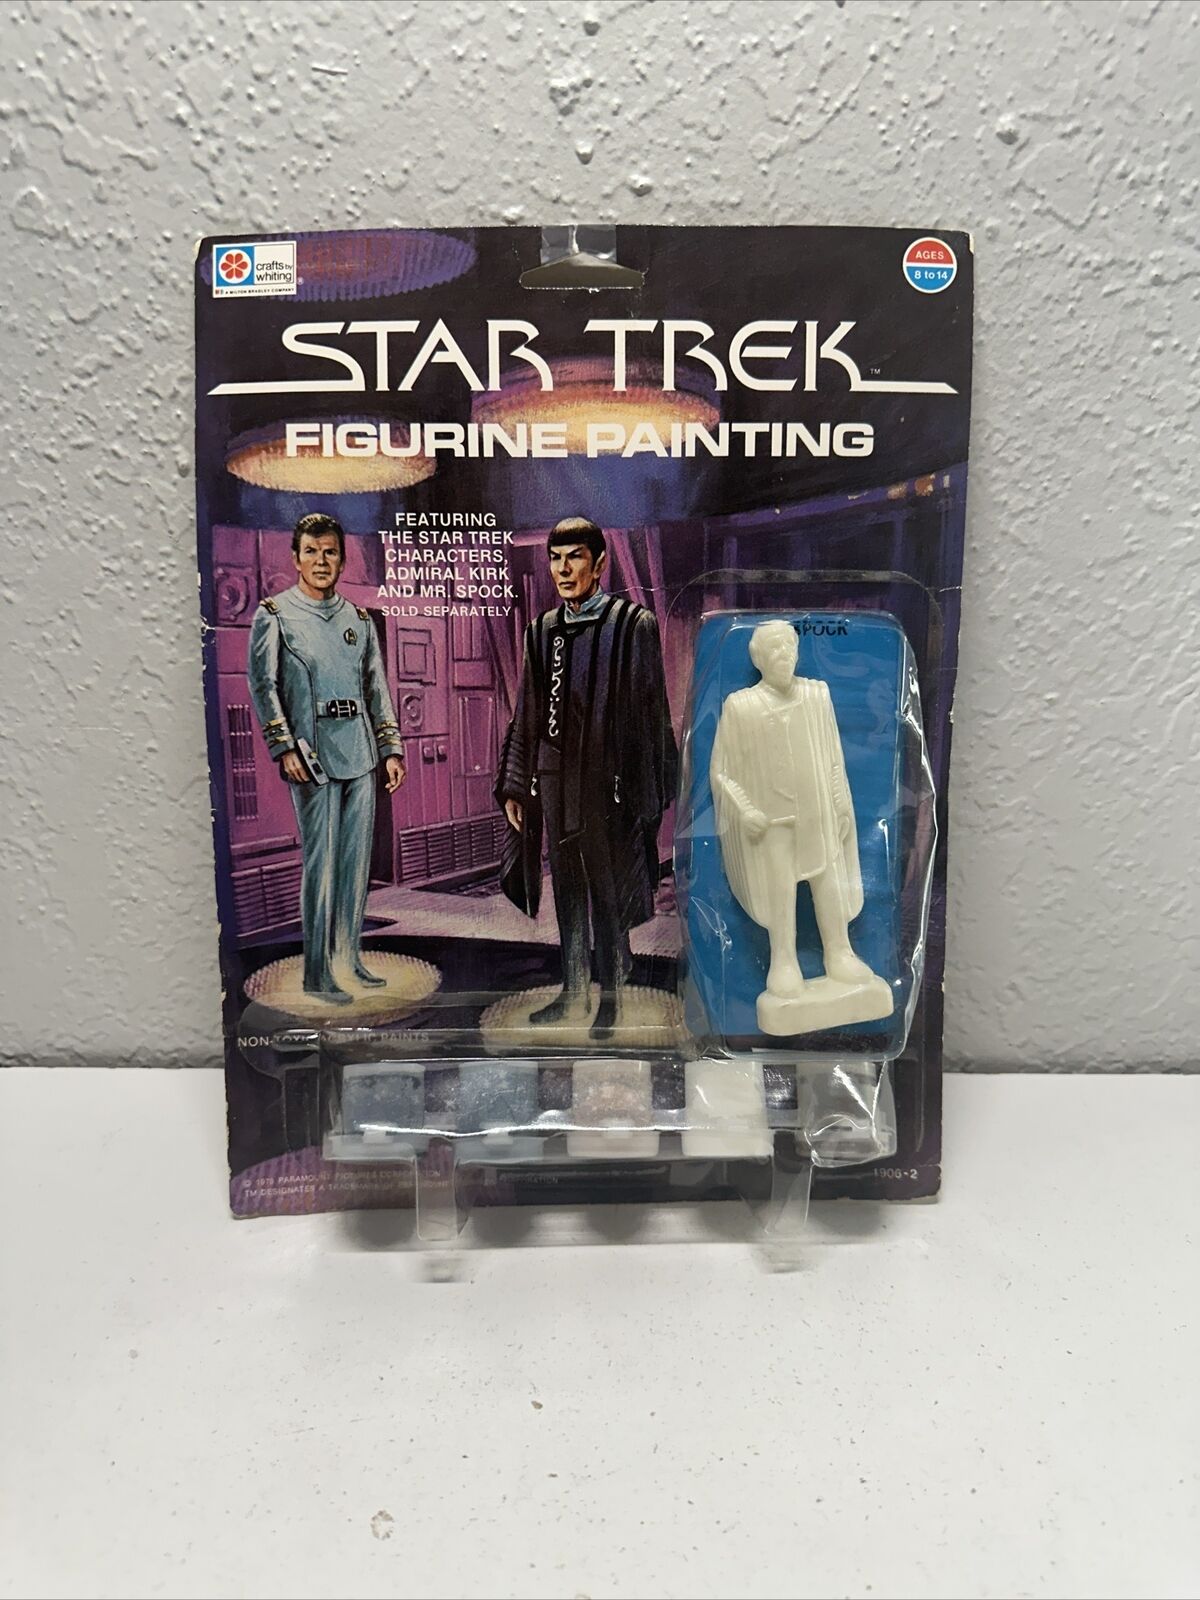 Star Trek 1979 Figurine Painting Mr. Spock BRAND NEW SEE PICS